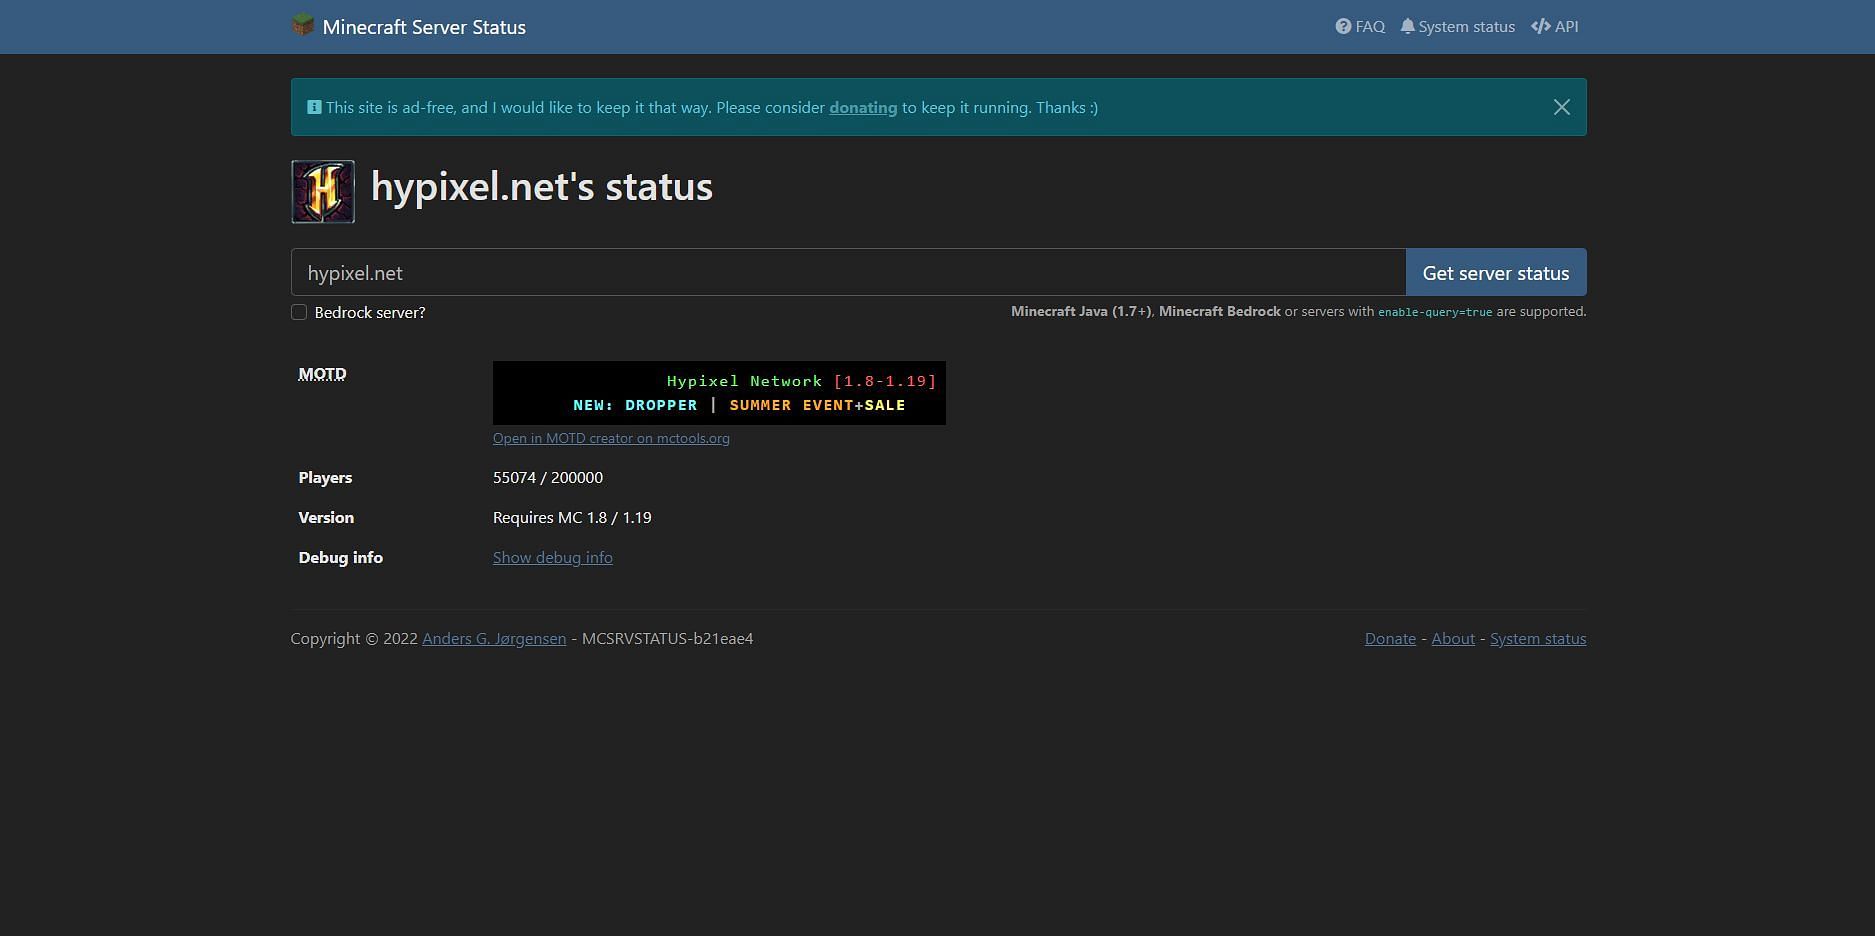 An example of a Minecraft server status website (Image via mcsrvstat.us)